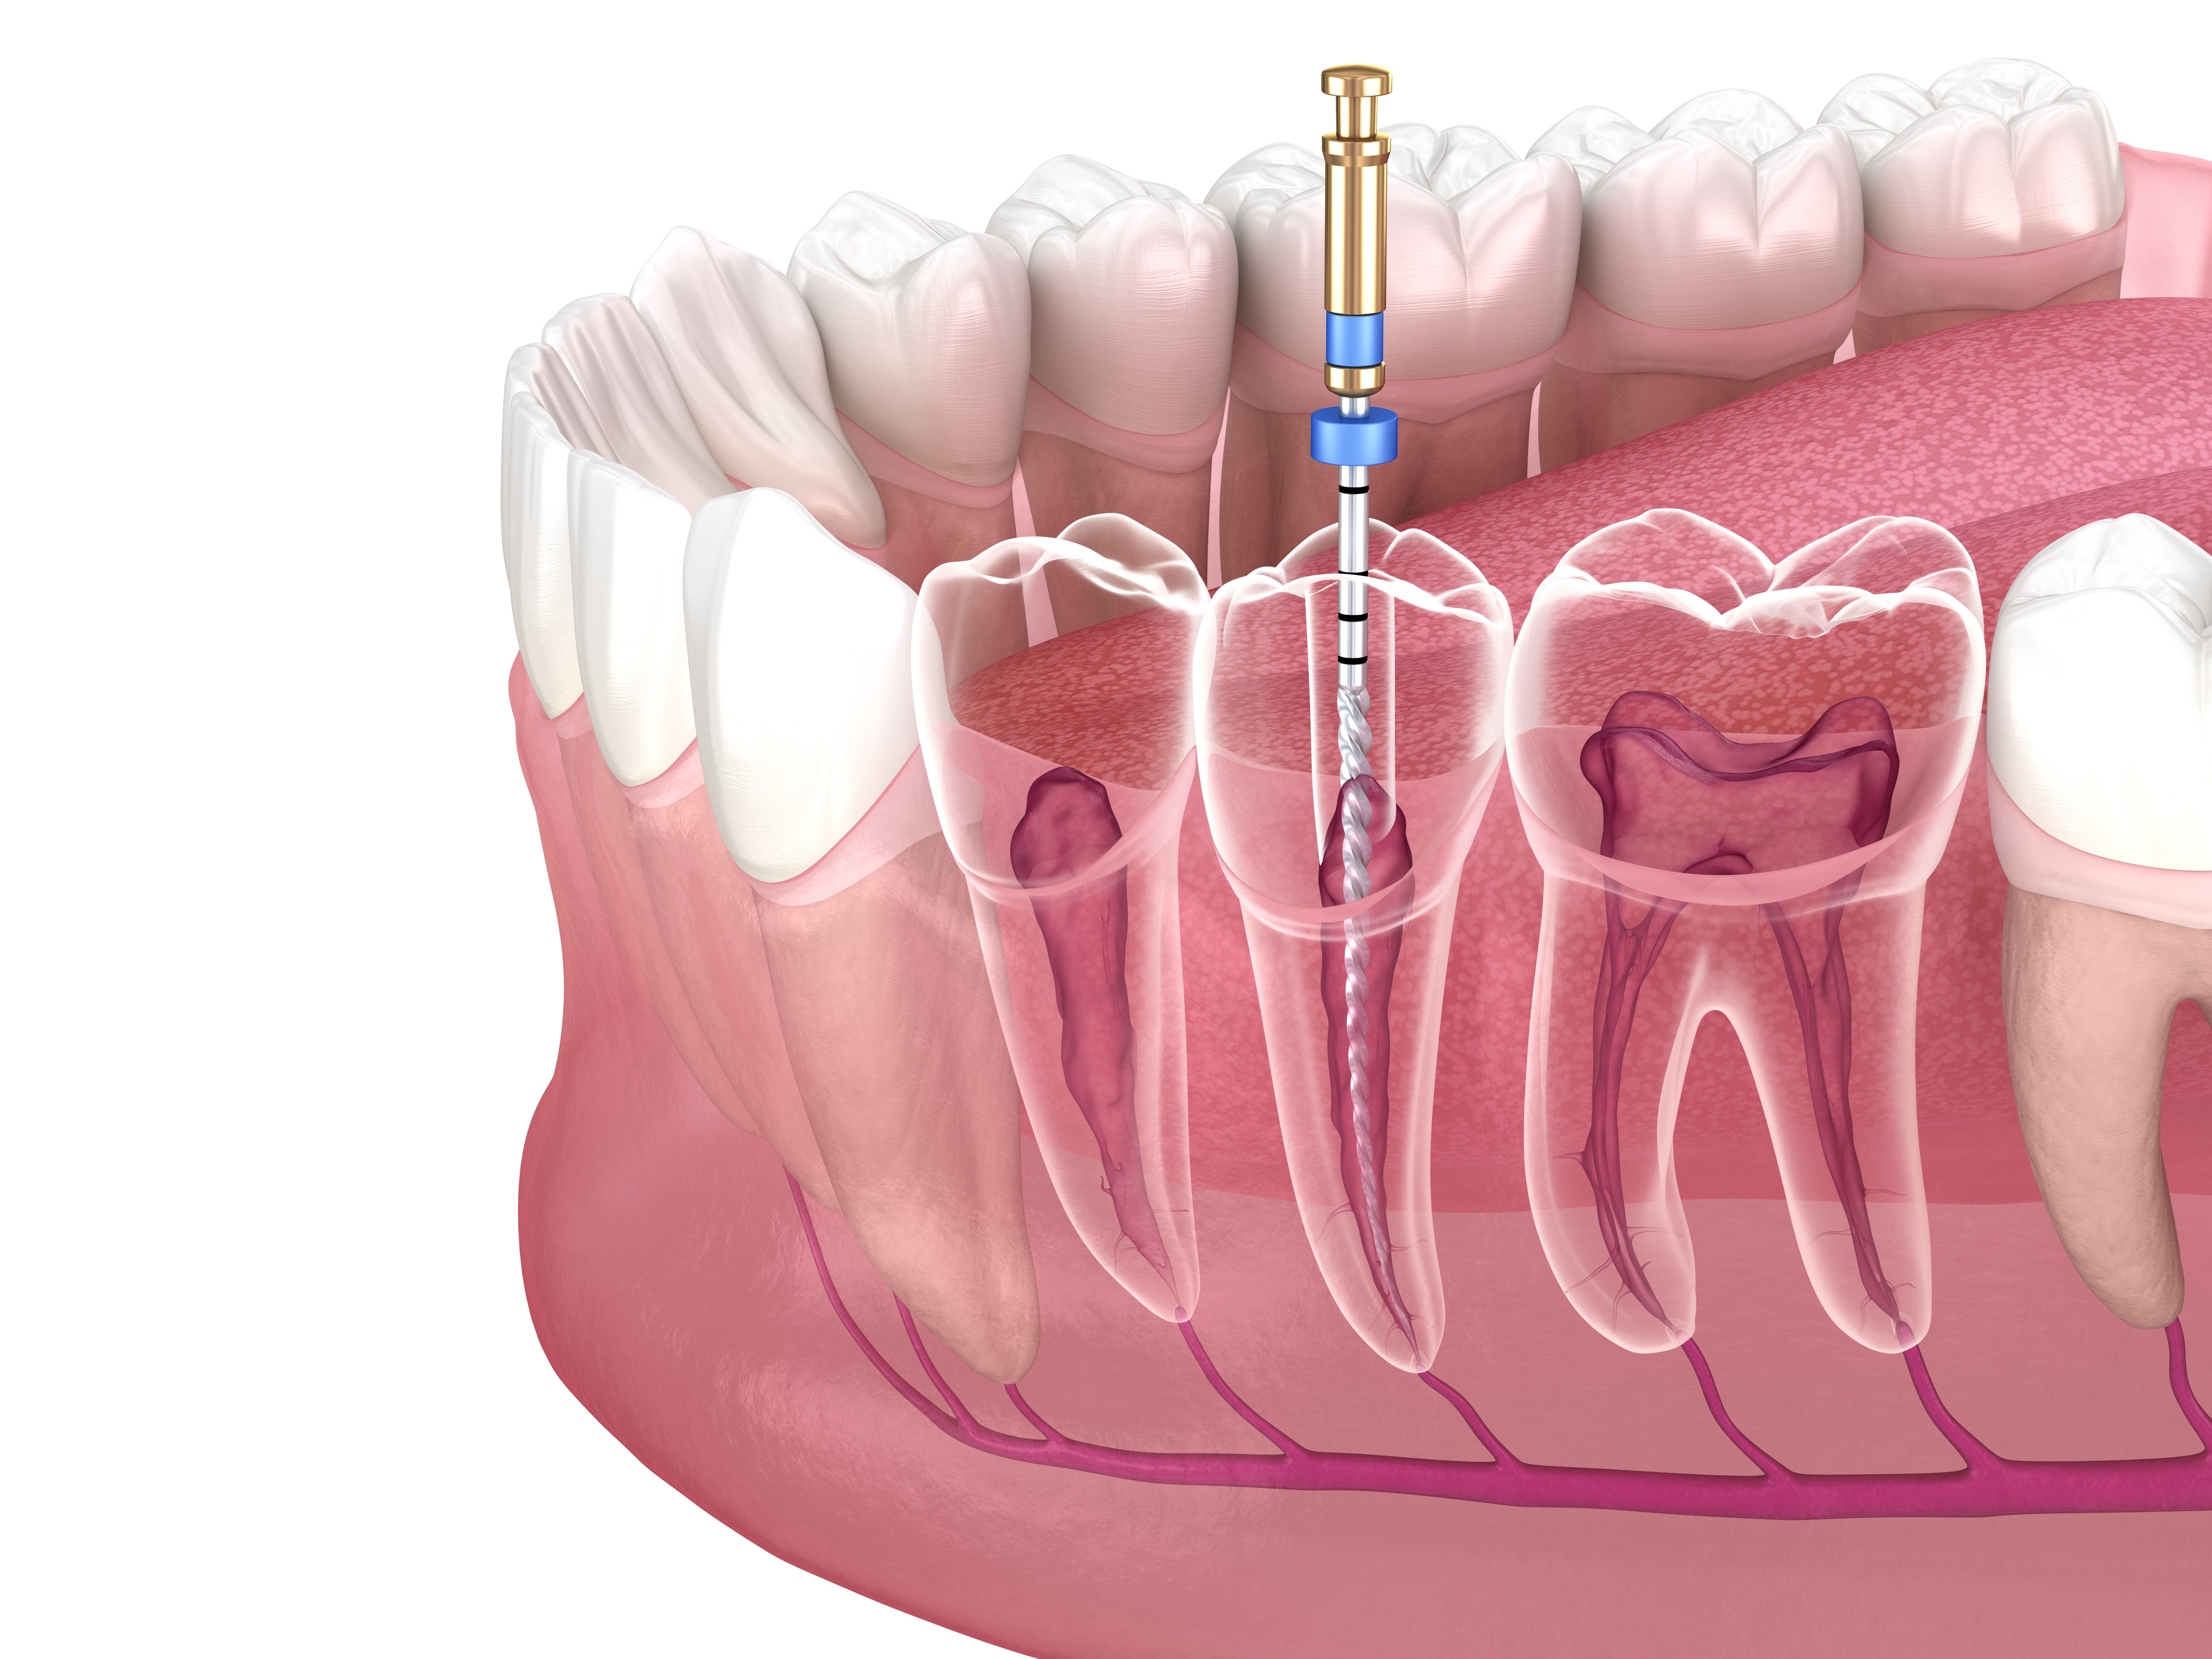 Endodontics/Root canal treatment